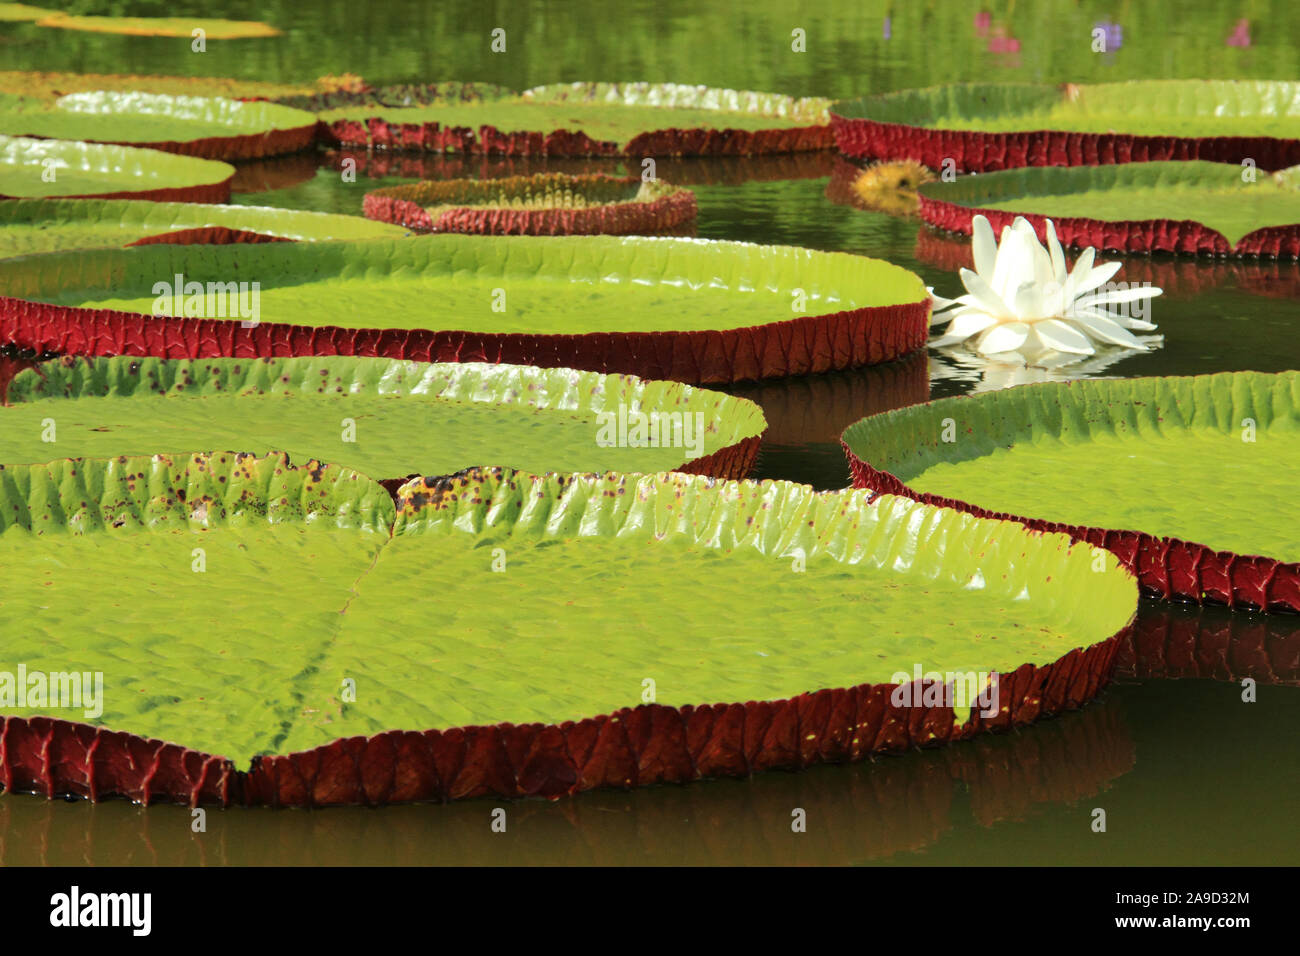 Victoria cruziana aquatic water plant with giant leaves Pantanal Brazil Stock Photo